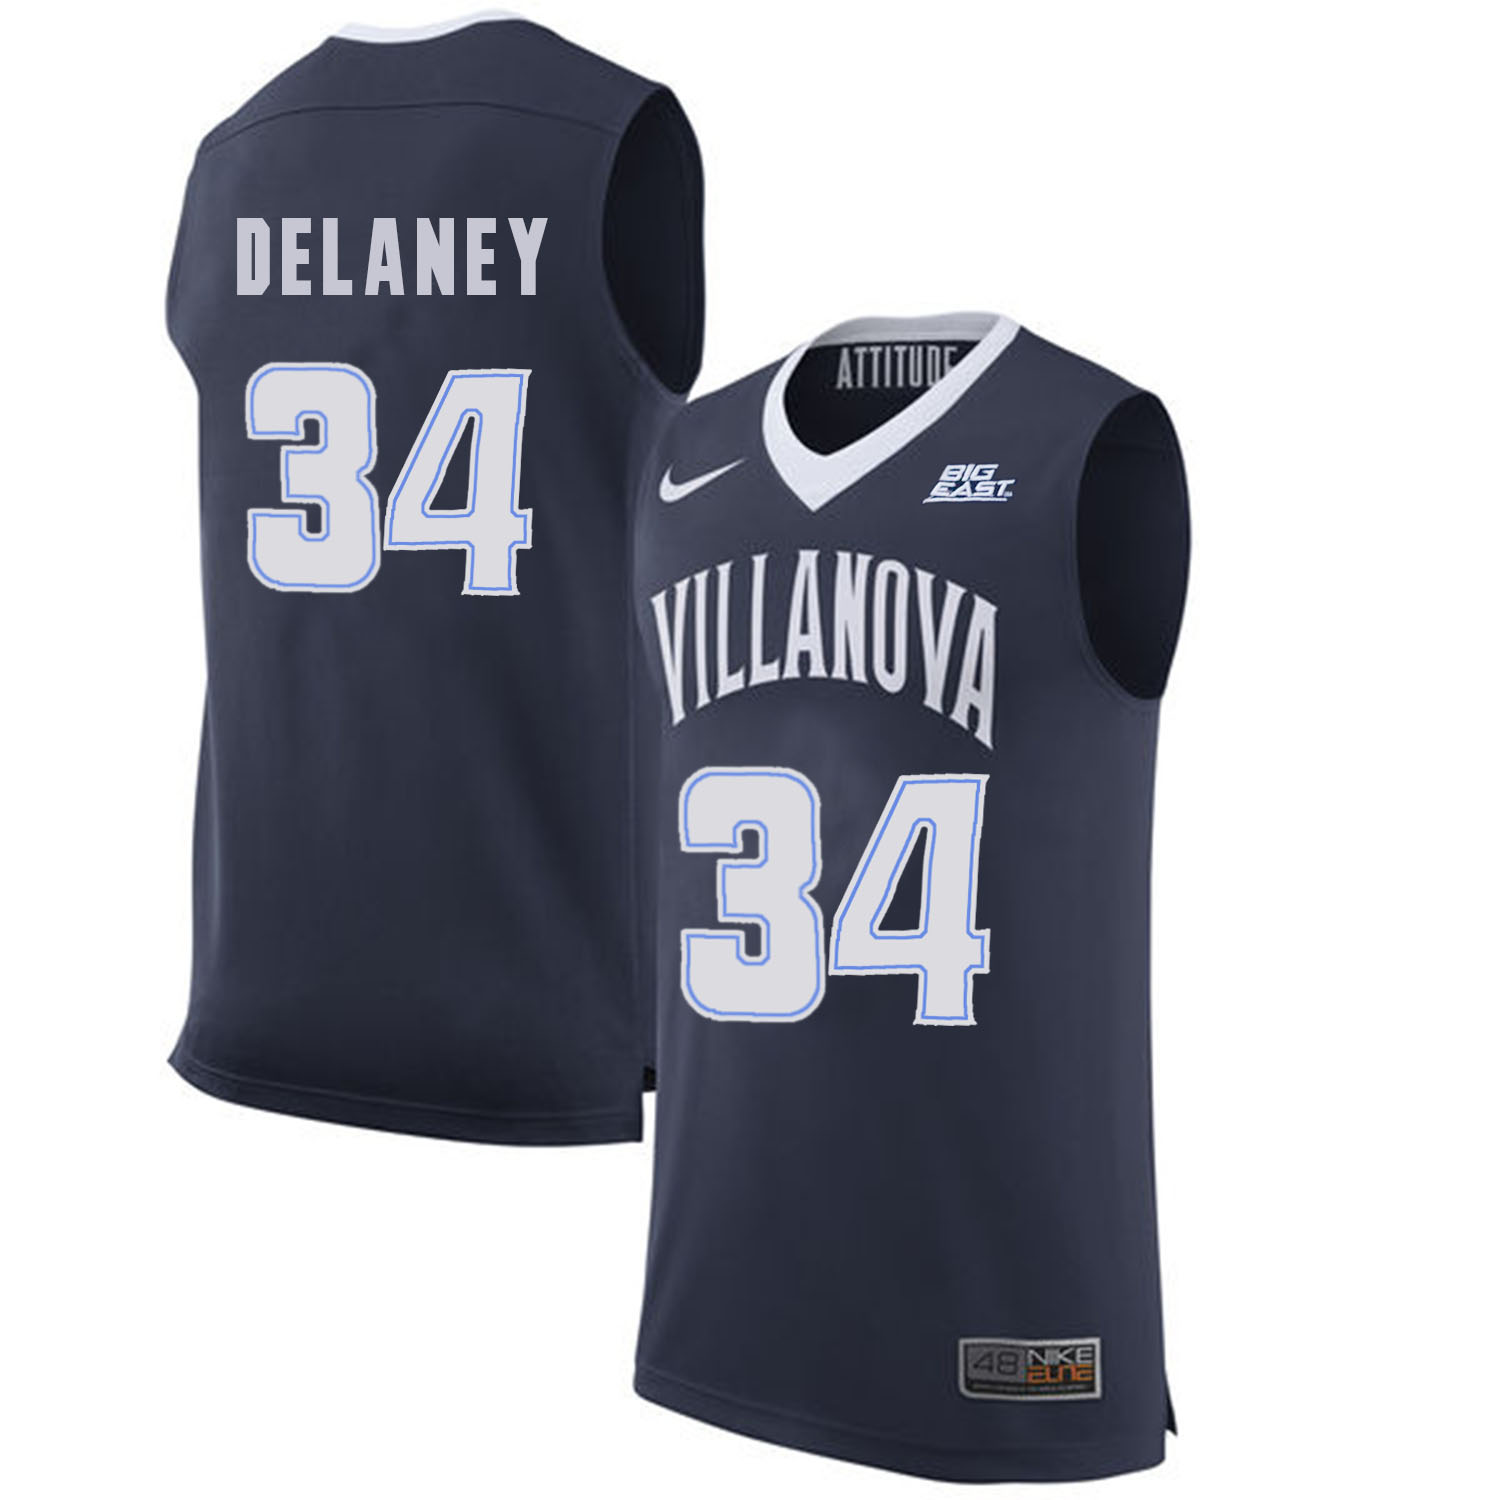 Villanova Wildcats 34 Tim Delaney Navy College Basketball Elite Jersey